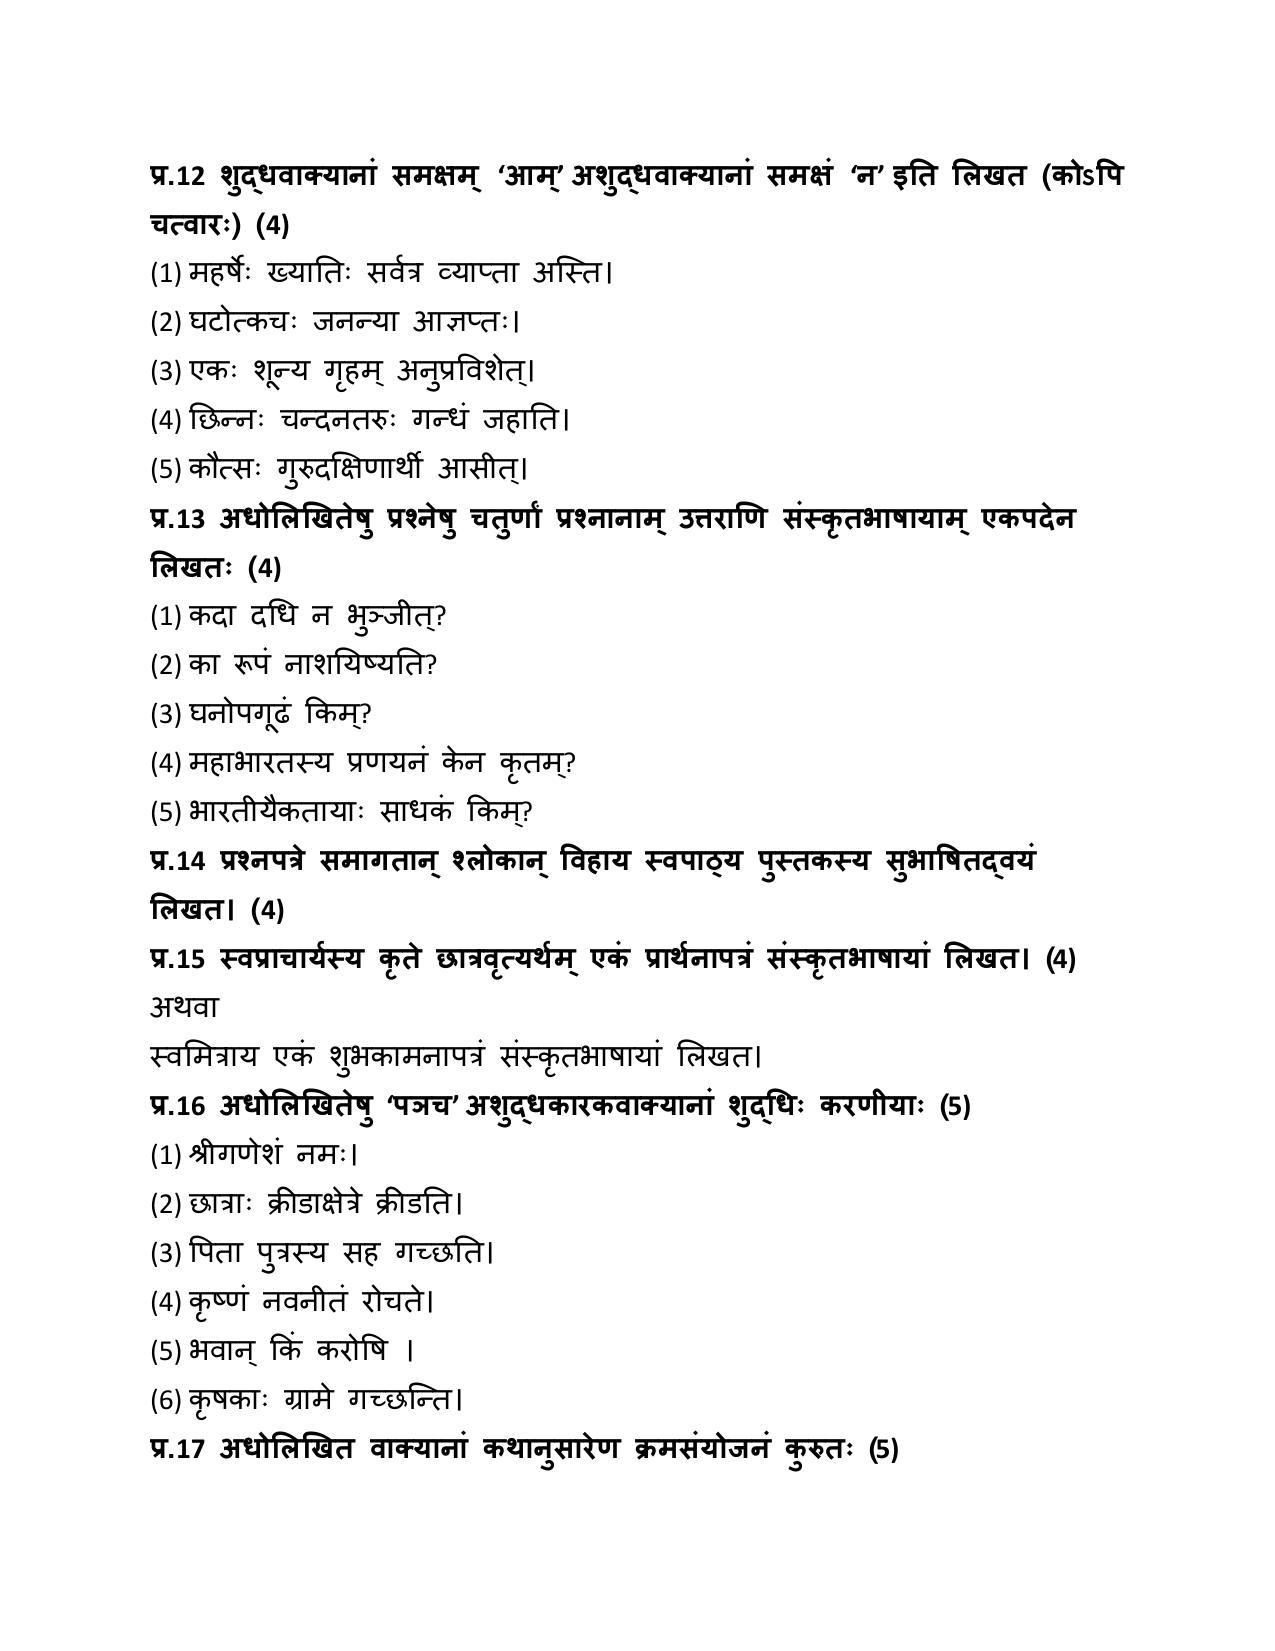 MP Board Class 10 Sanskrit General 2018 Question Paper - Page 6